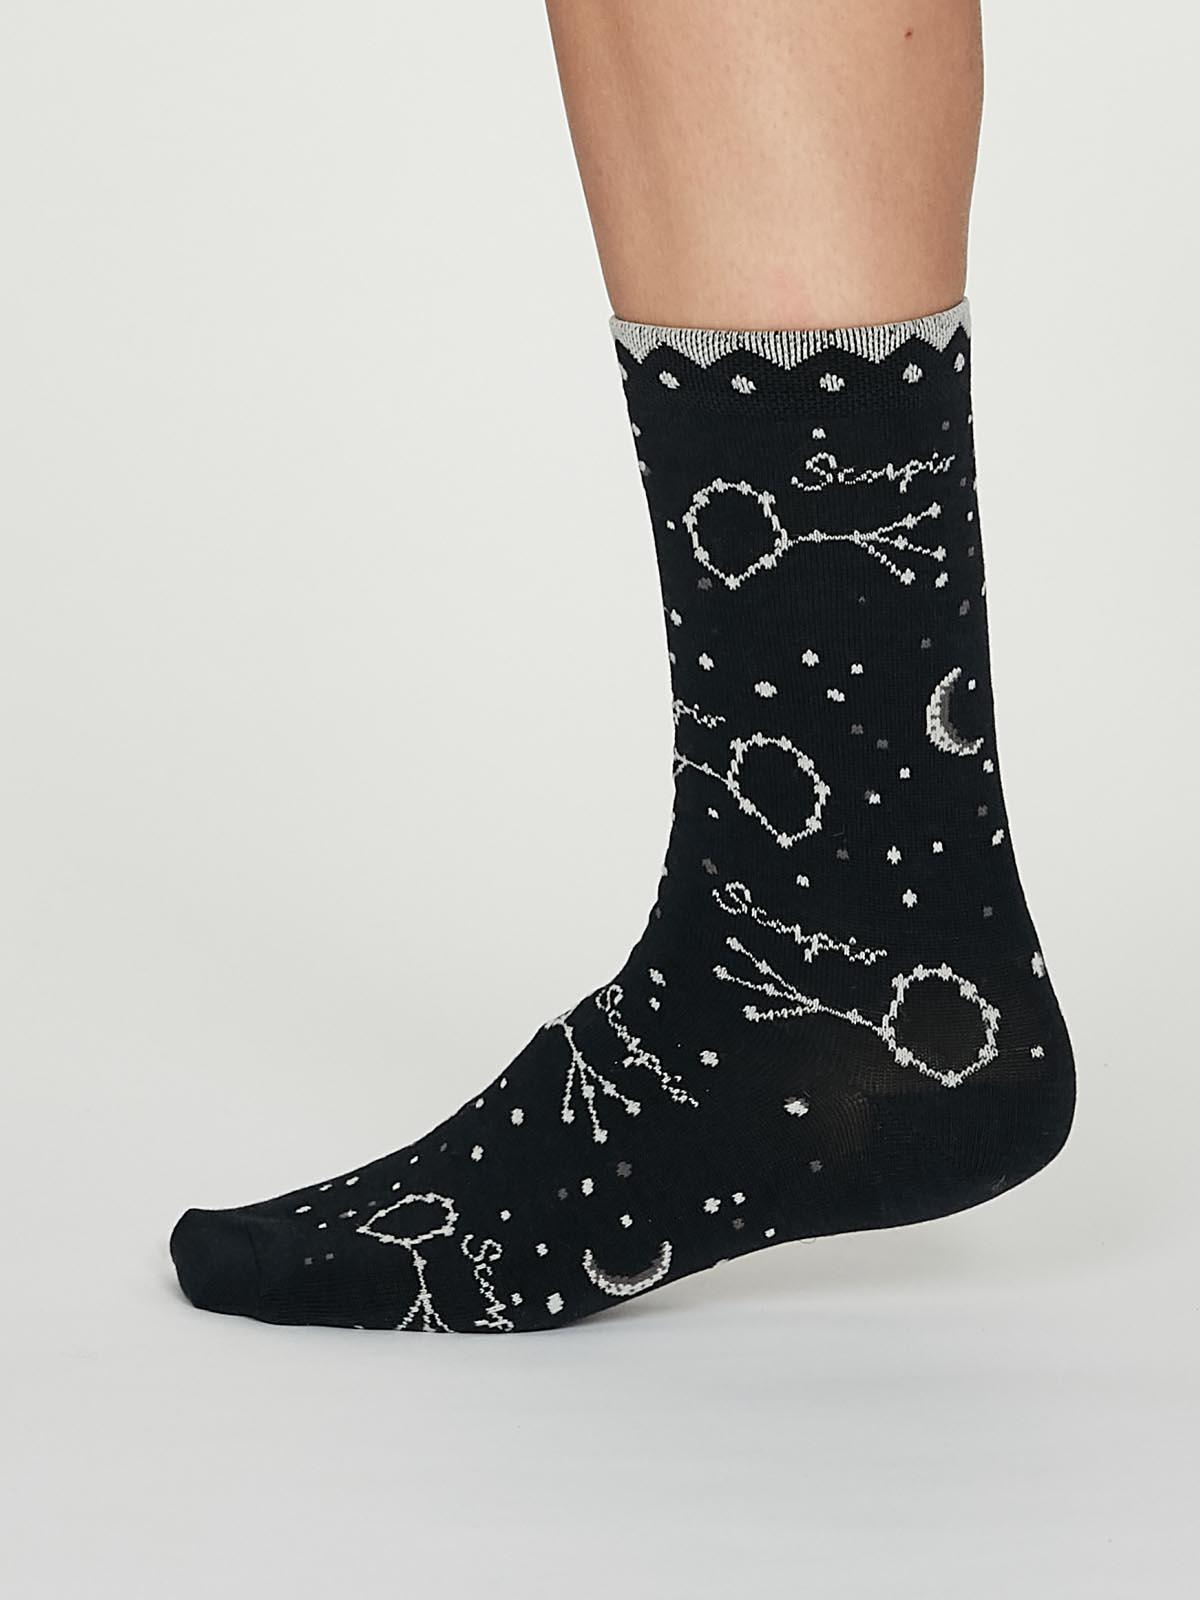 Scorpio Zodiac Bamboo Organic Cotton Horoscope Star Sign Socks - Thought Clothing UK